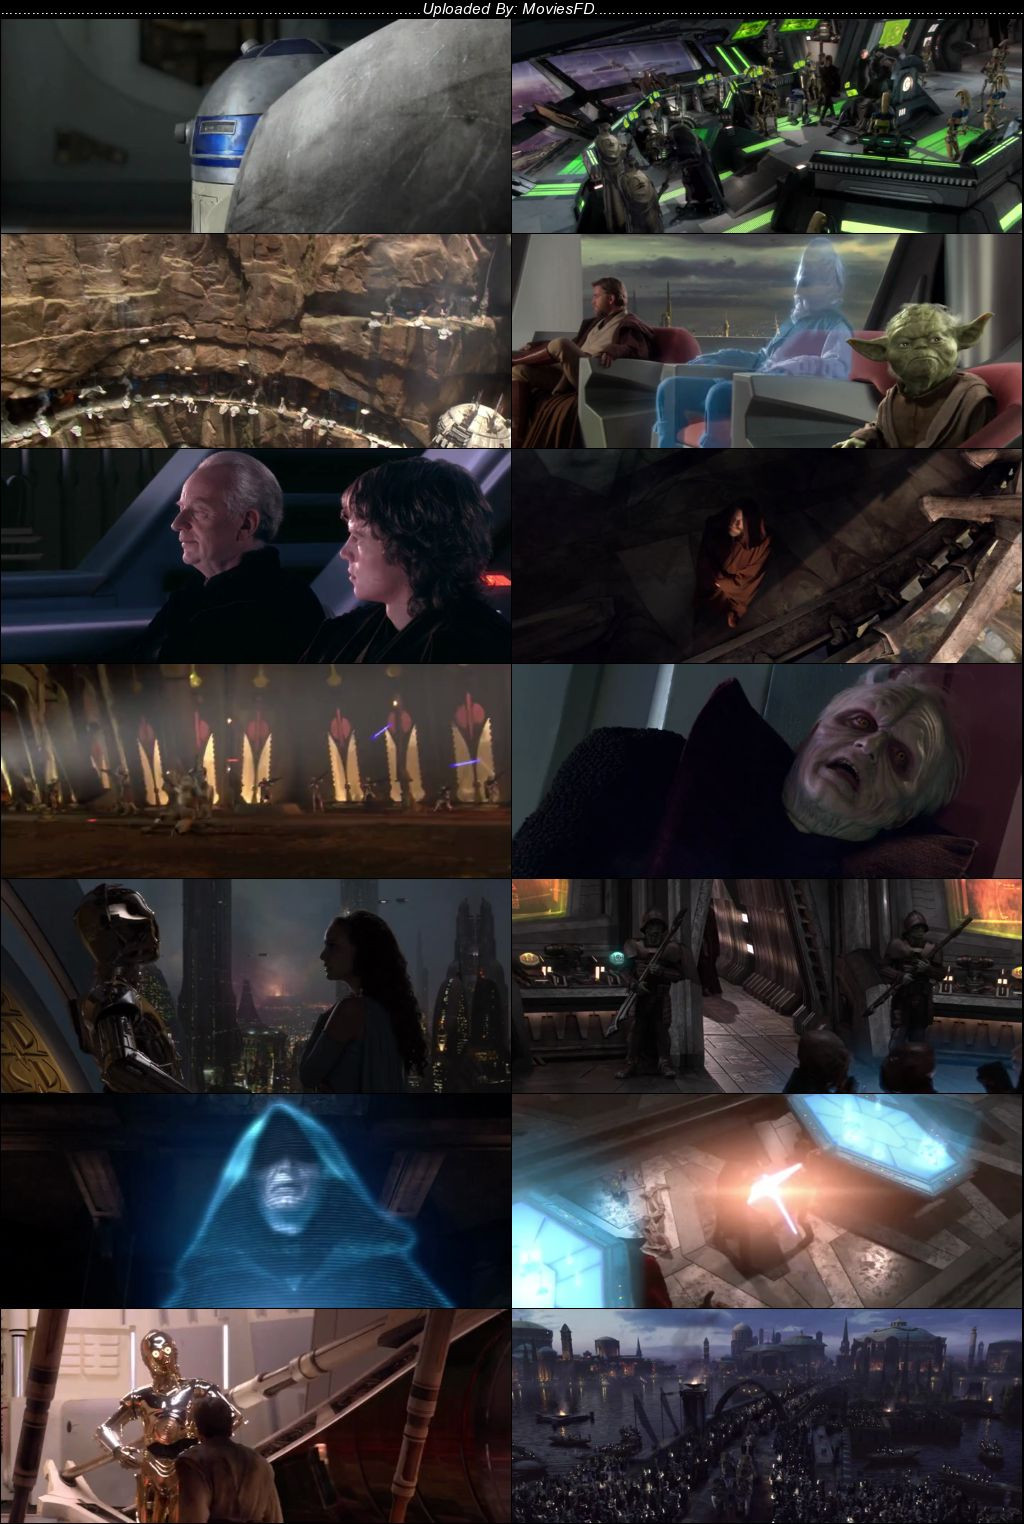 Download Star Wars: Episode III - Revenge of the Sith (2005) BluRay [Hindi + English] ESub 480p 720p